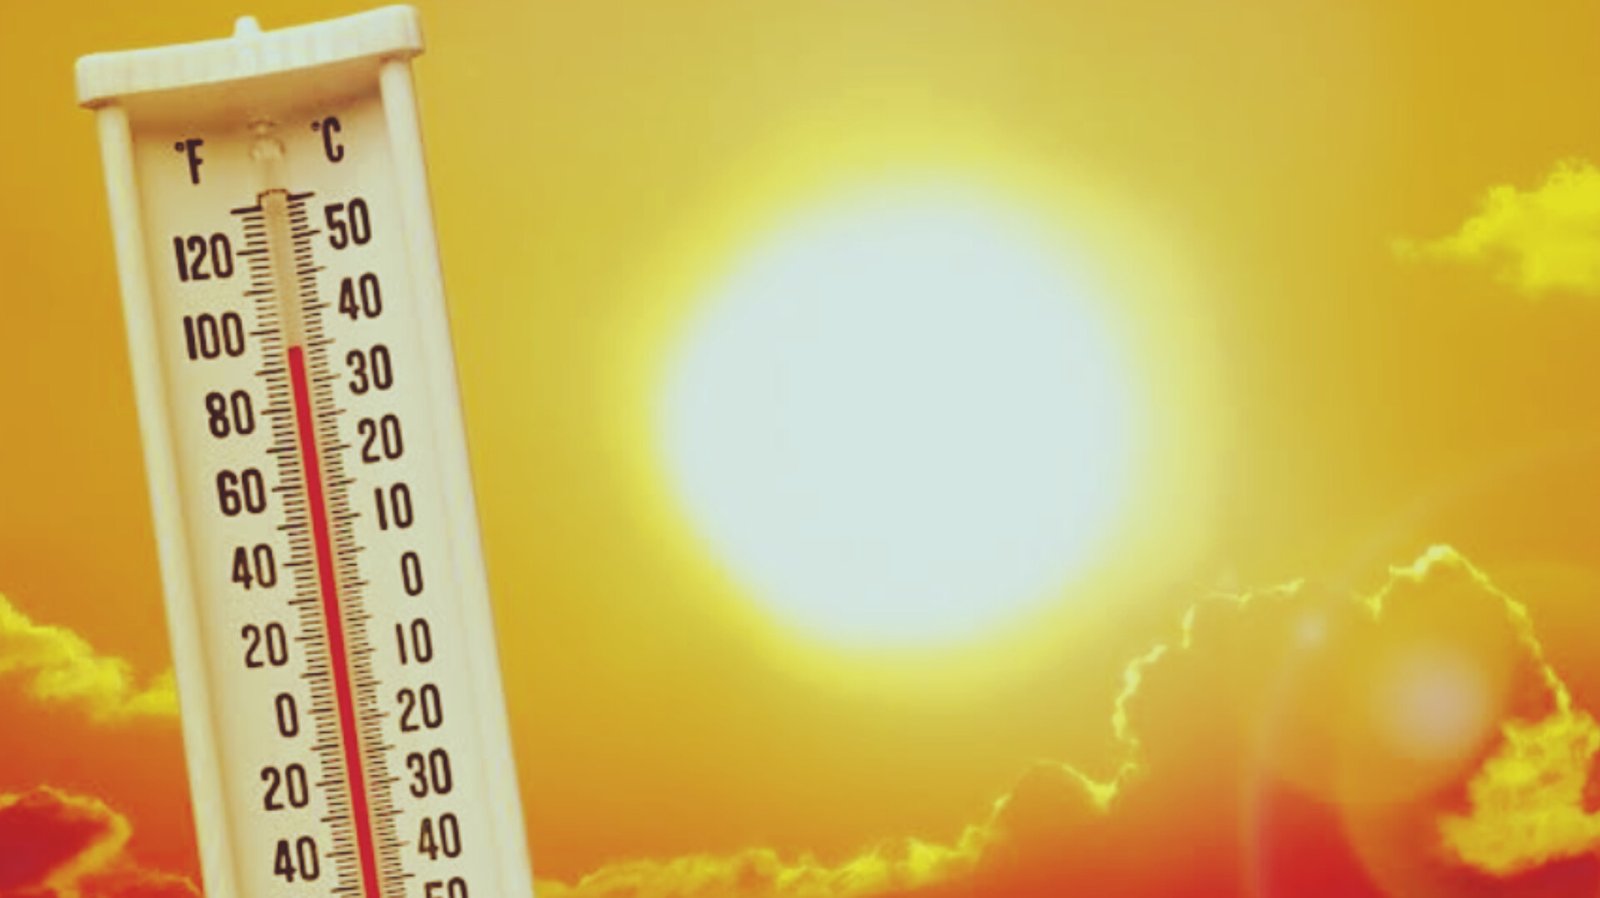 Mercury soars in Odisha: Heatwave alert issued as temperatures soar